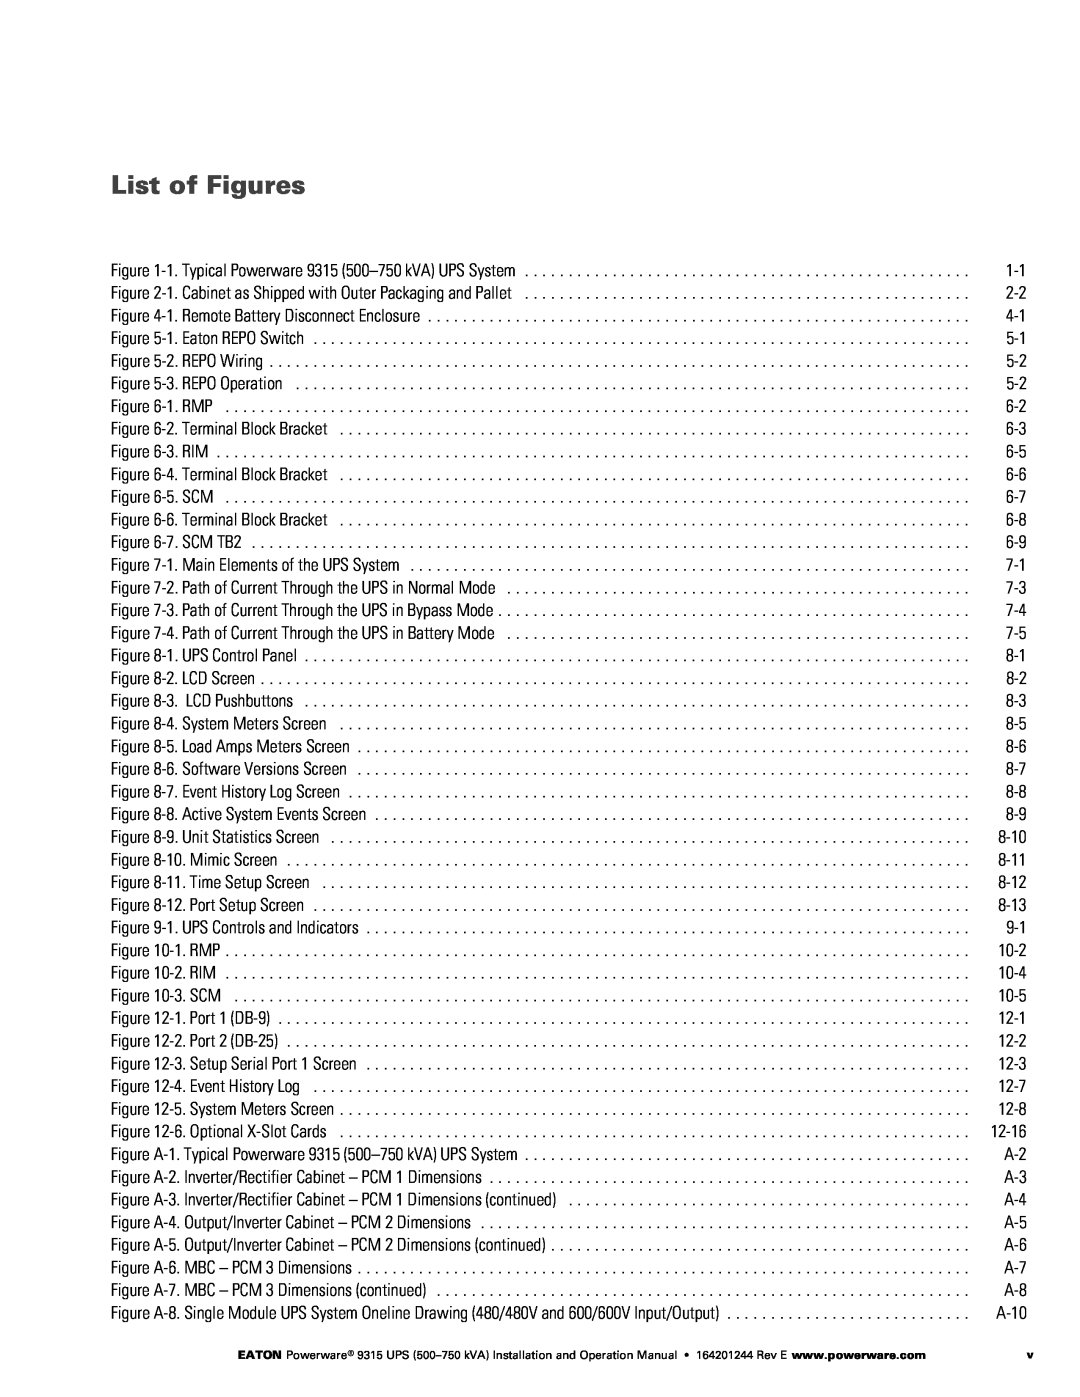 Powerware Powerware 9315 operation manual List of Figures 